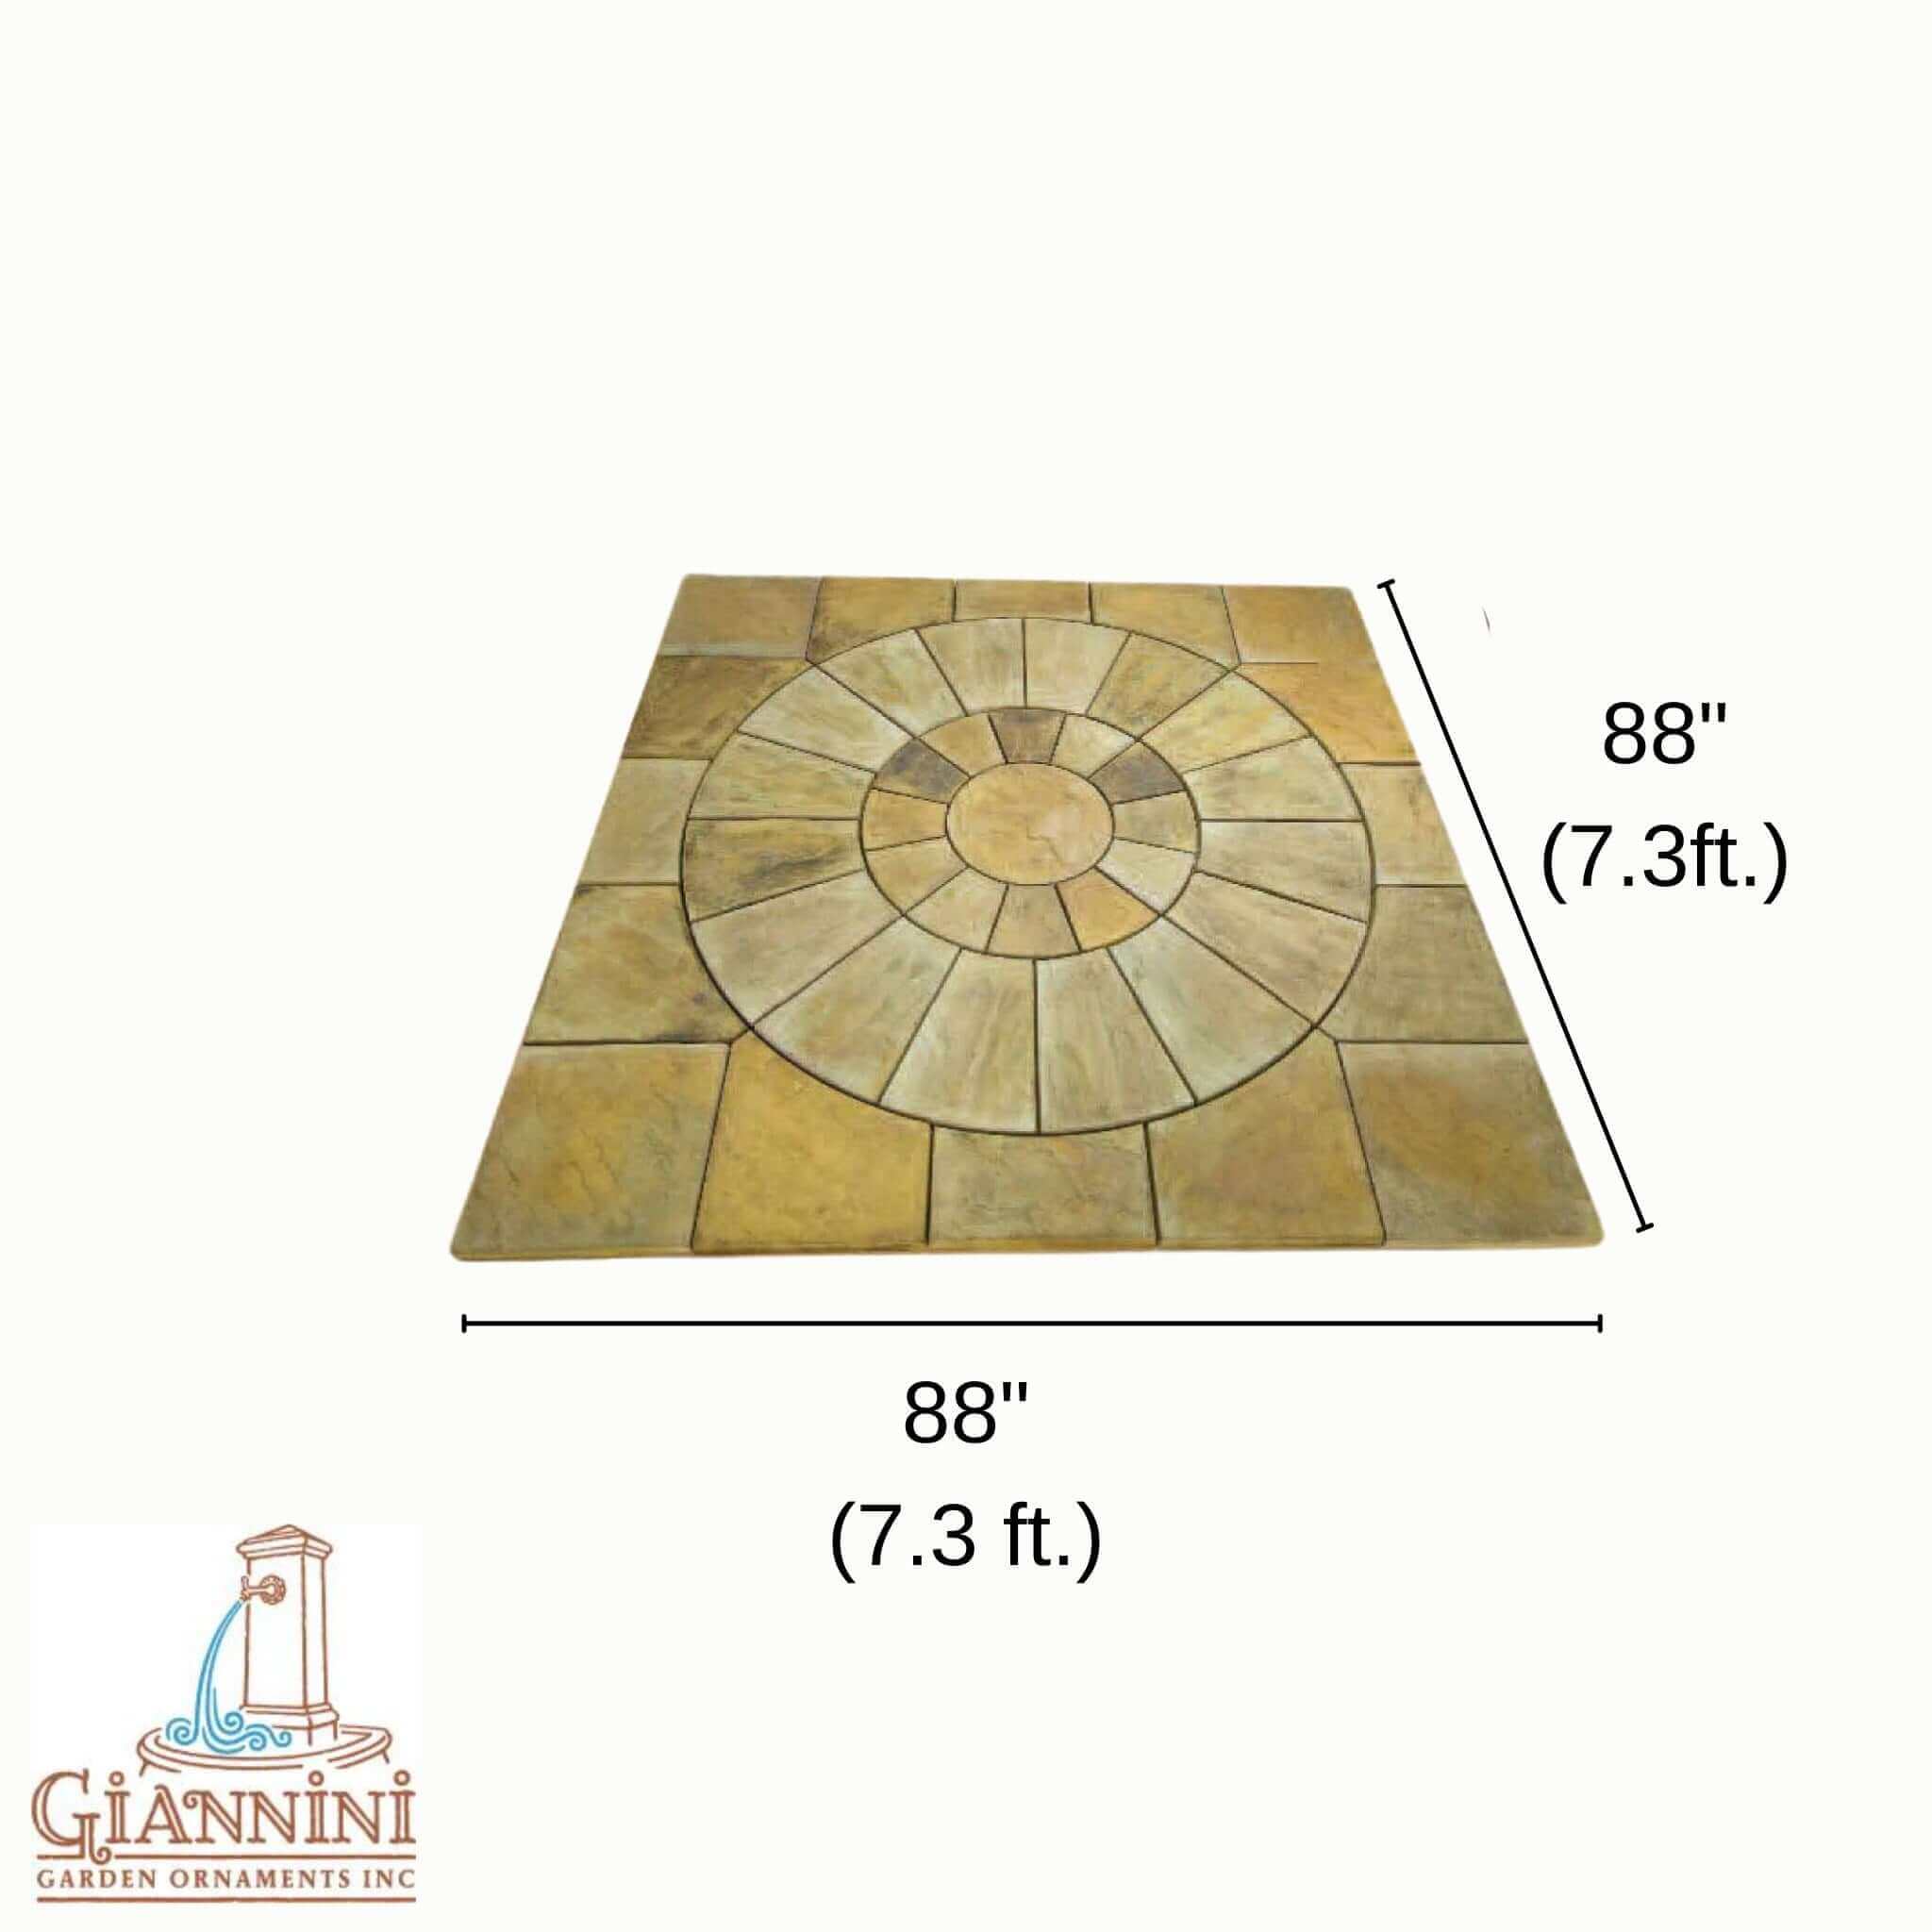 Square Slate Style Foundation for Fountain 88" - Giannini #903